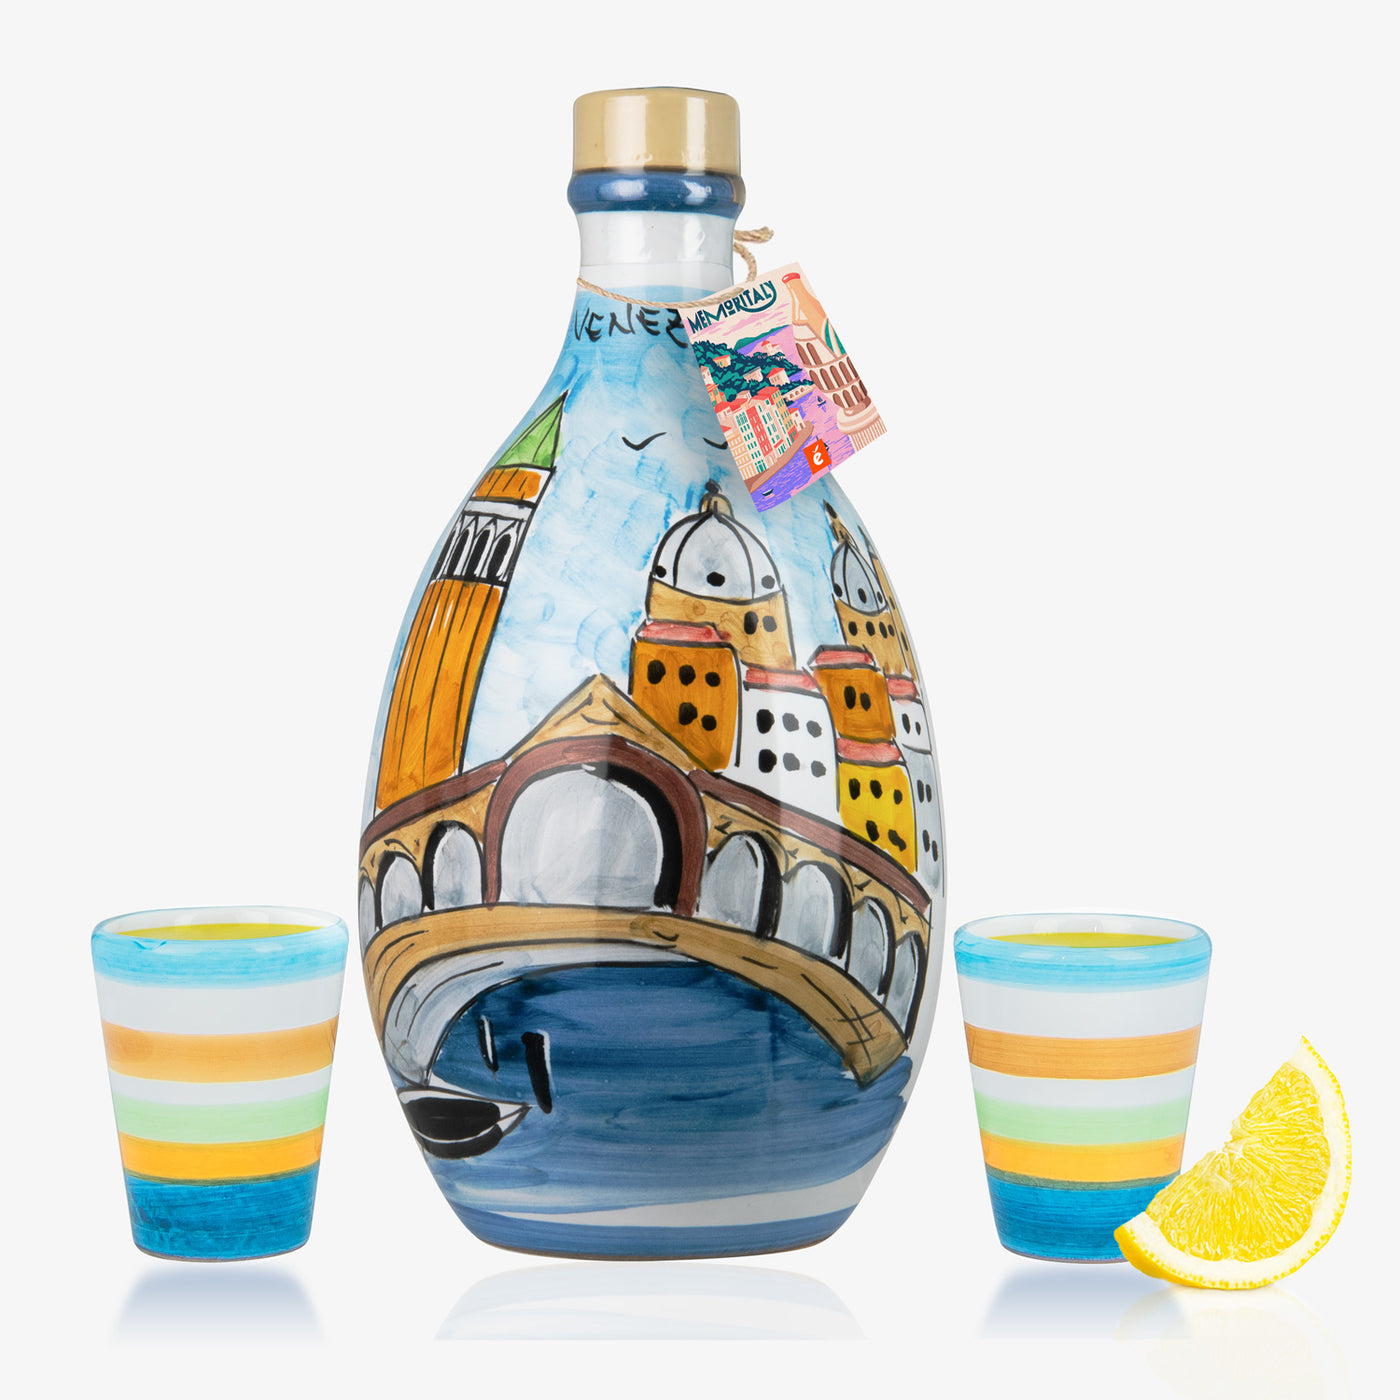 'Venezia' - Handmade Jar Limoncello